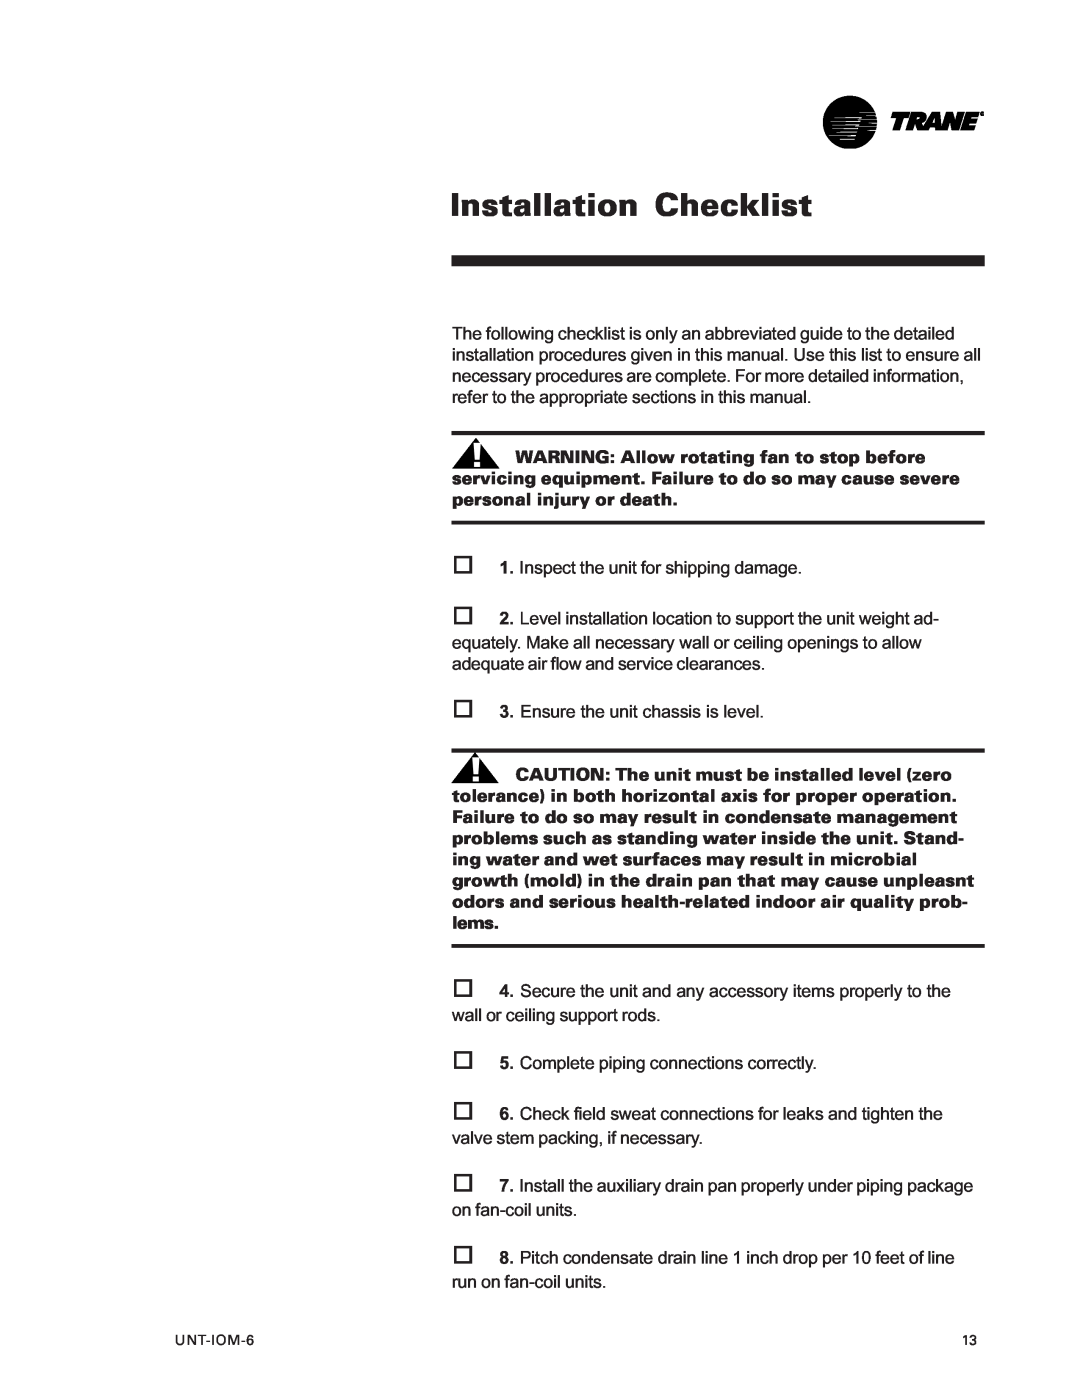 Trane LO manual Installation Checklist 